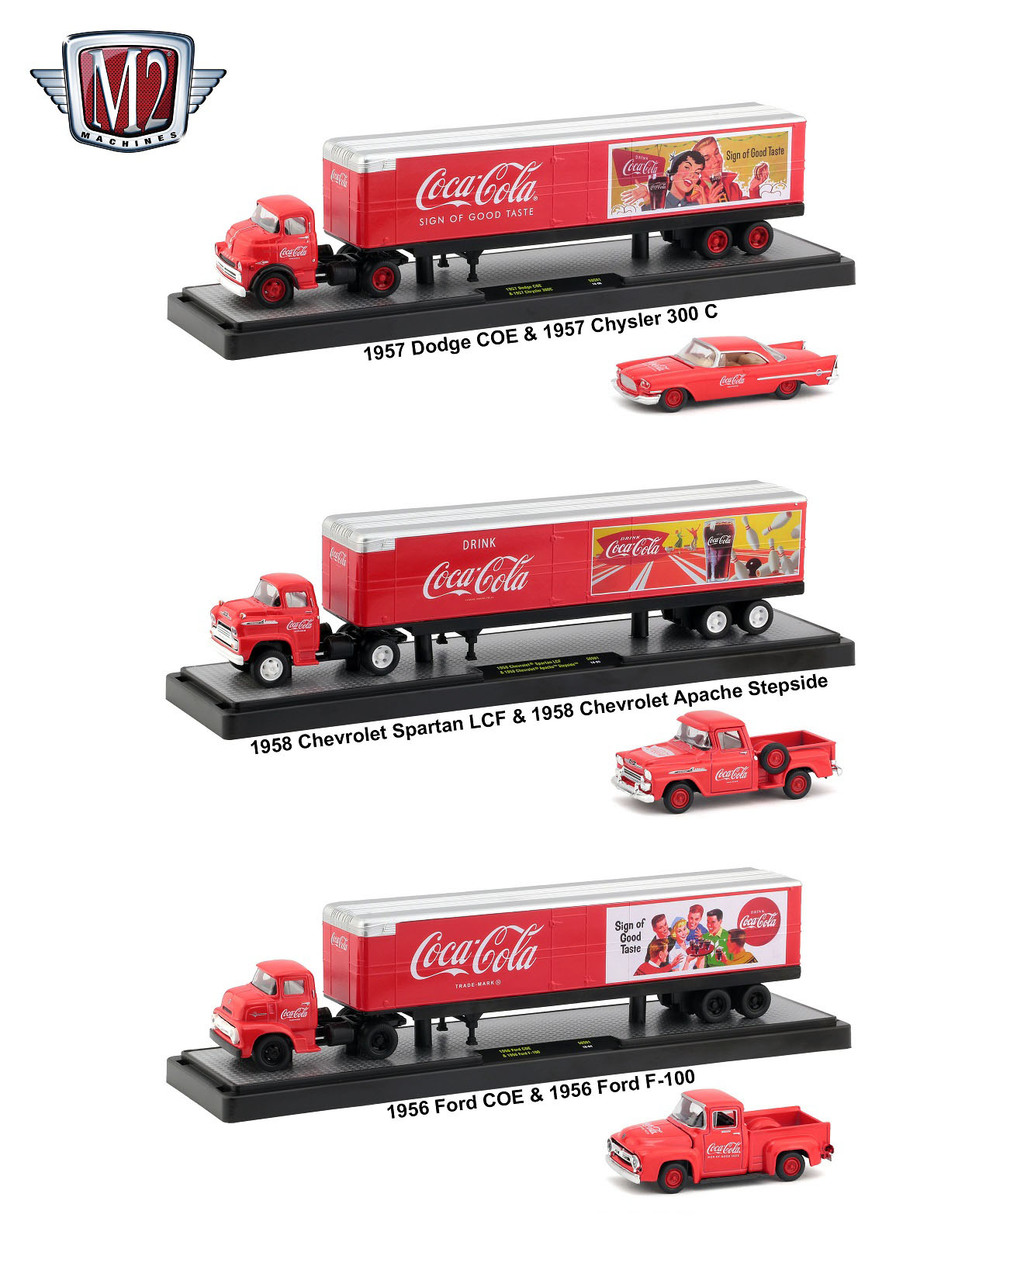 Auto Haulers "coca-cola" 3 Trucks Set 1/64 Diecast Models By M2 Machines